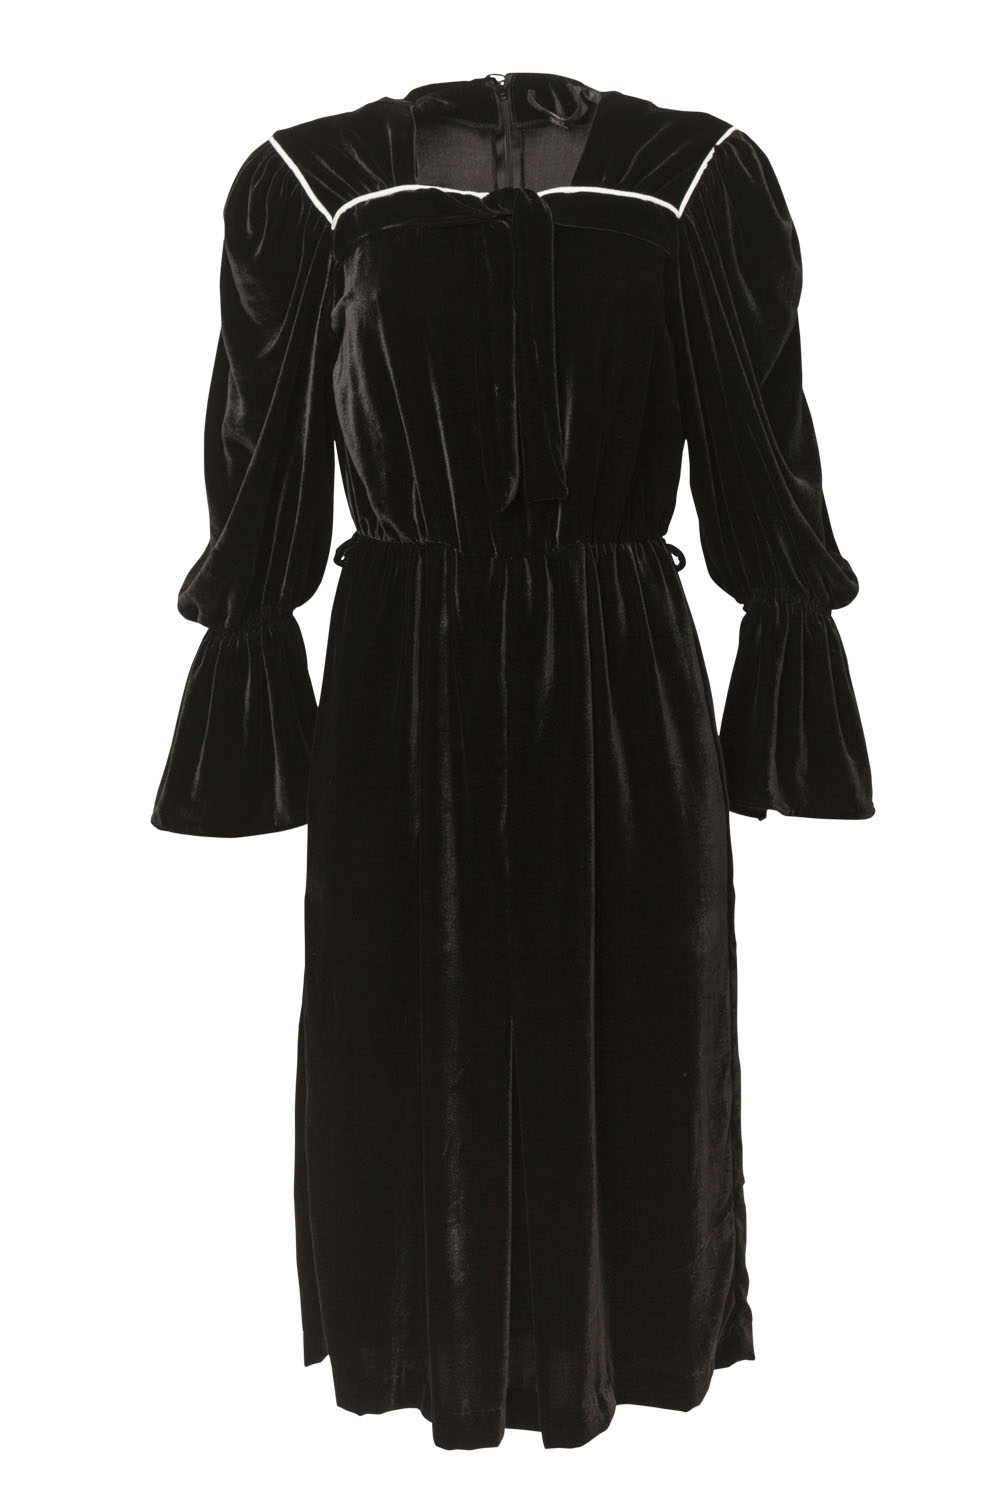 Dress, $605, by Itzme.